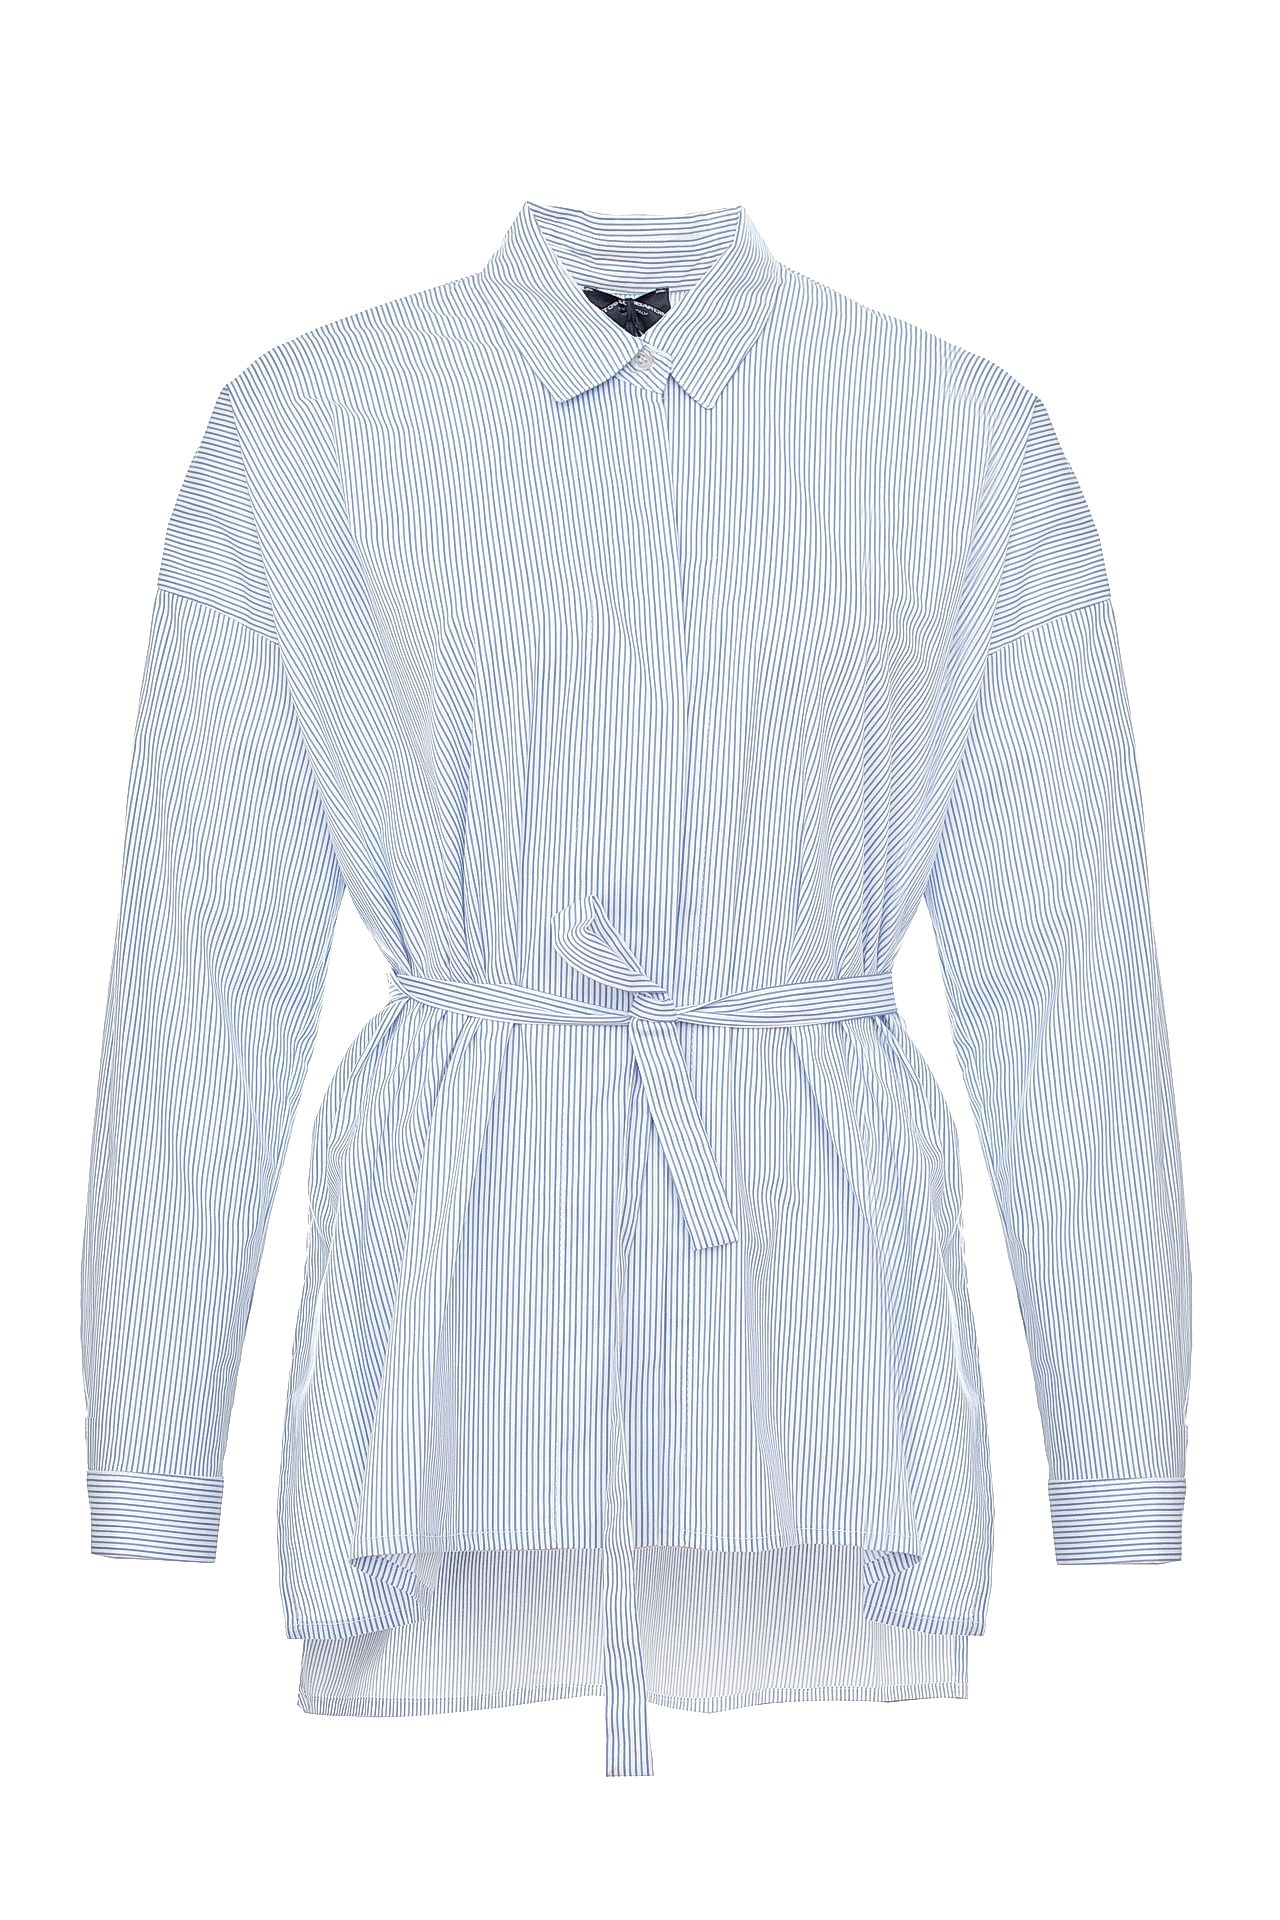 Одежда женская Рубашка ATOS LOMBARDINI (P7PP06002/17.2). Купить за 5750 руб.